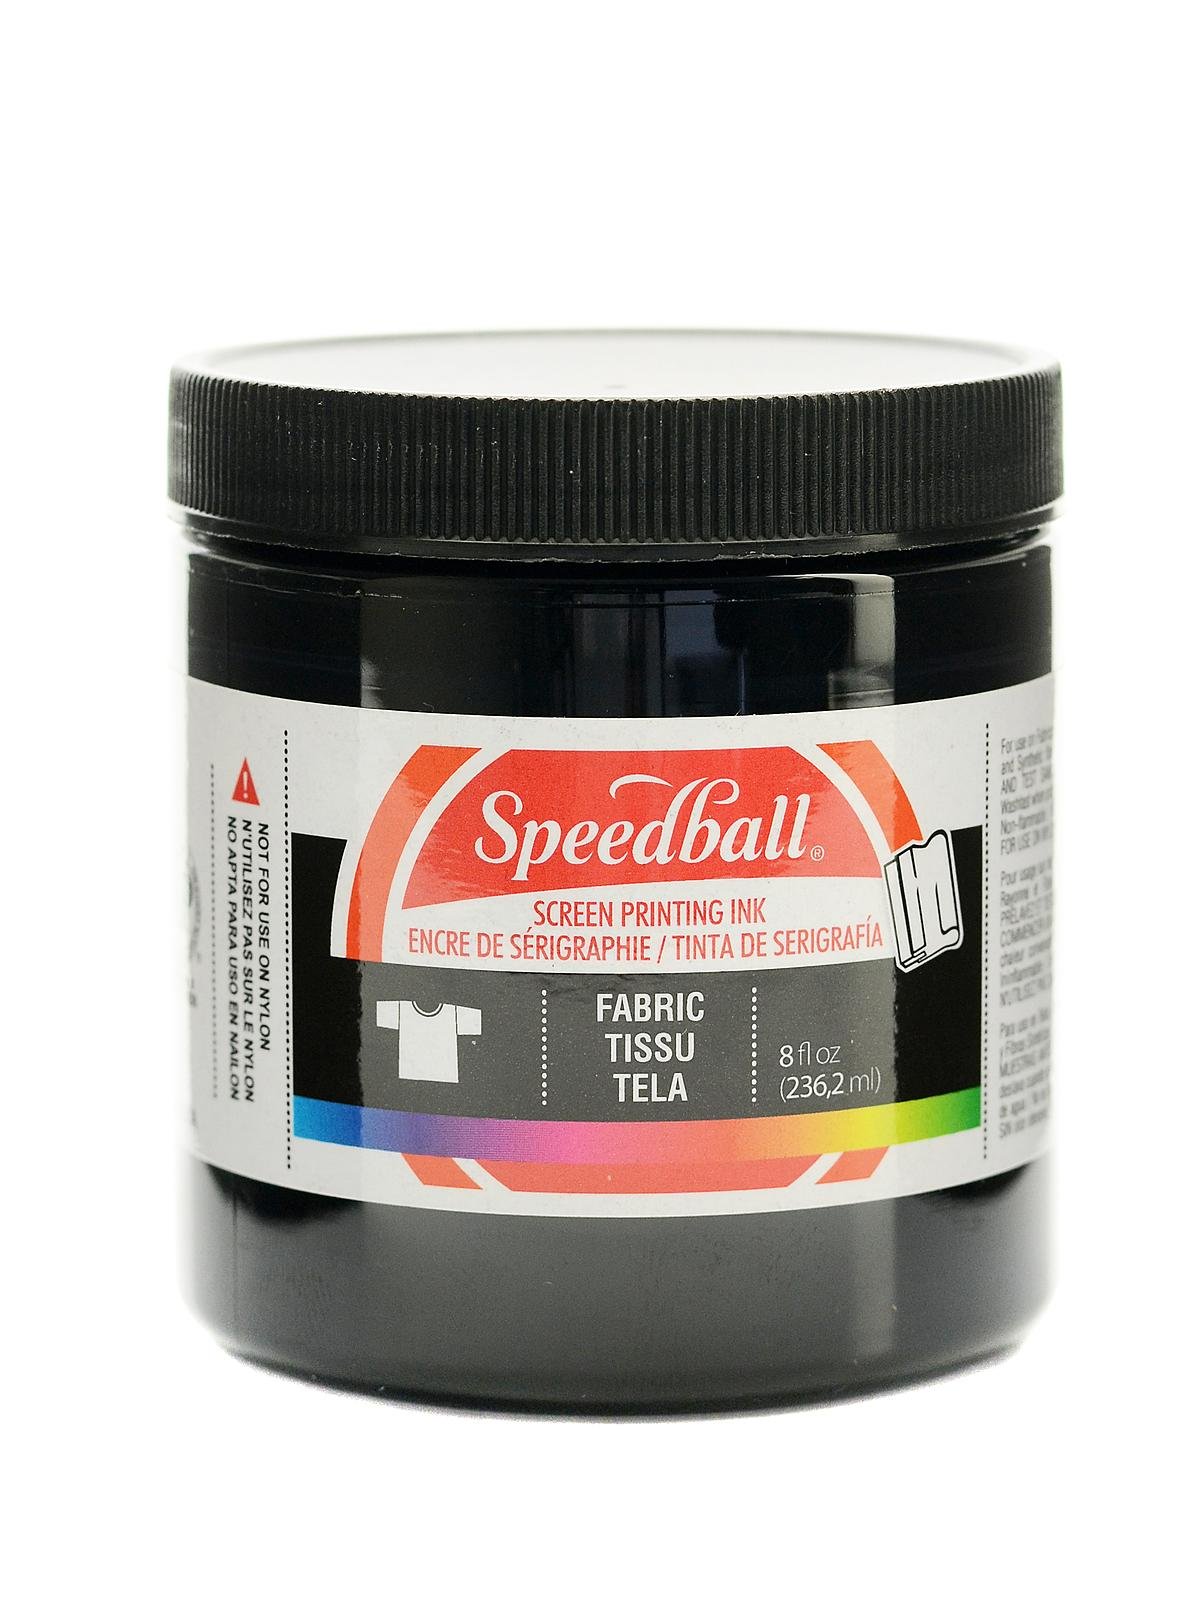 Speedball Fabric Screen Printing Ink 8 oz Jar - Orange